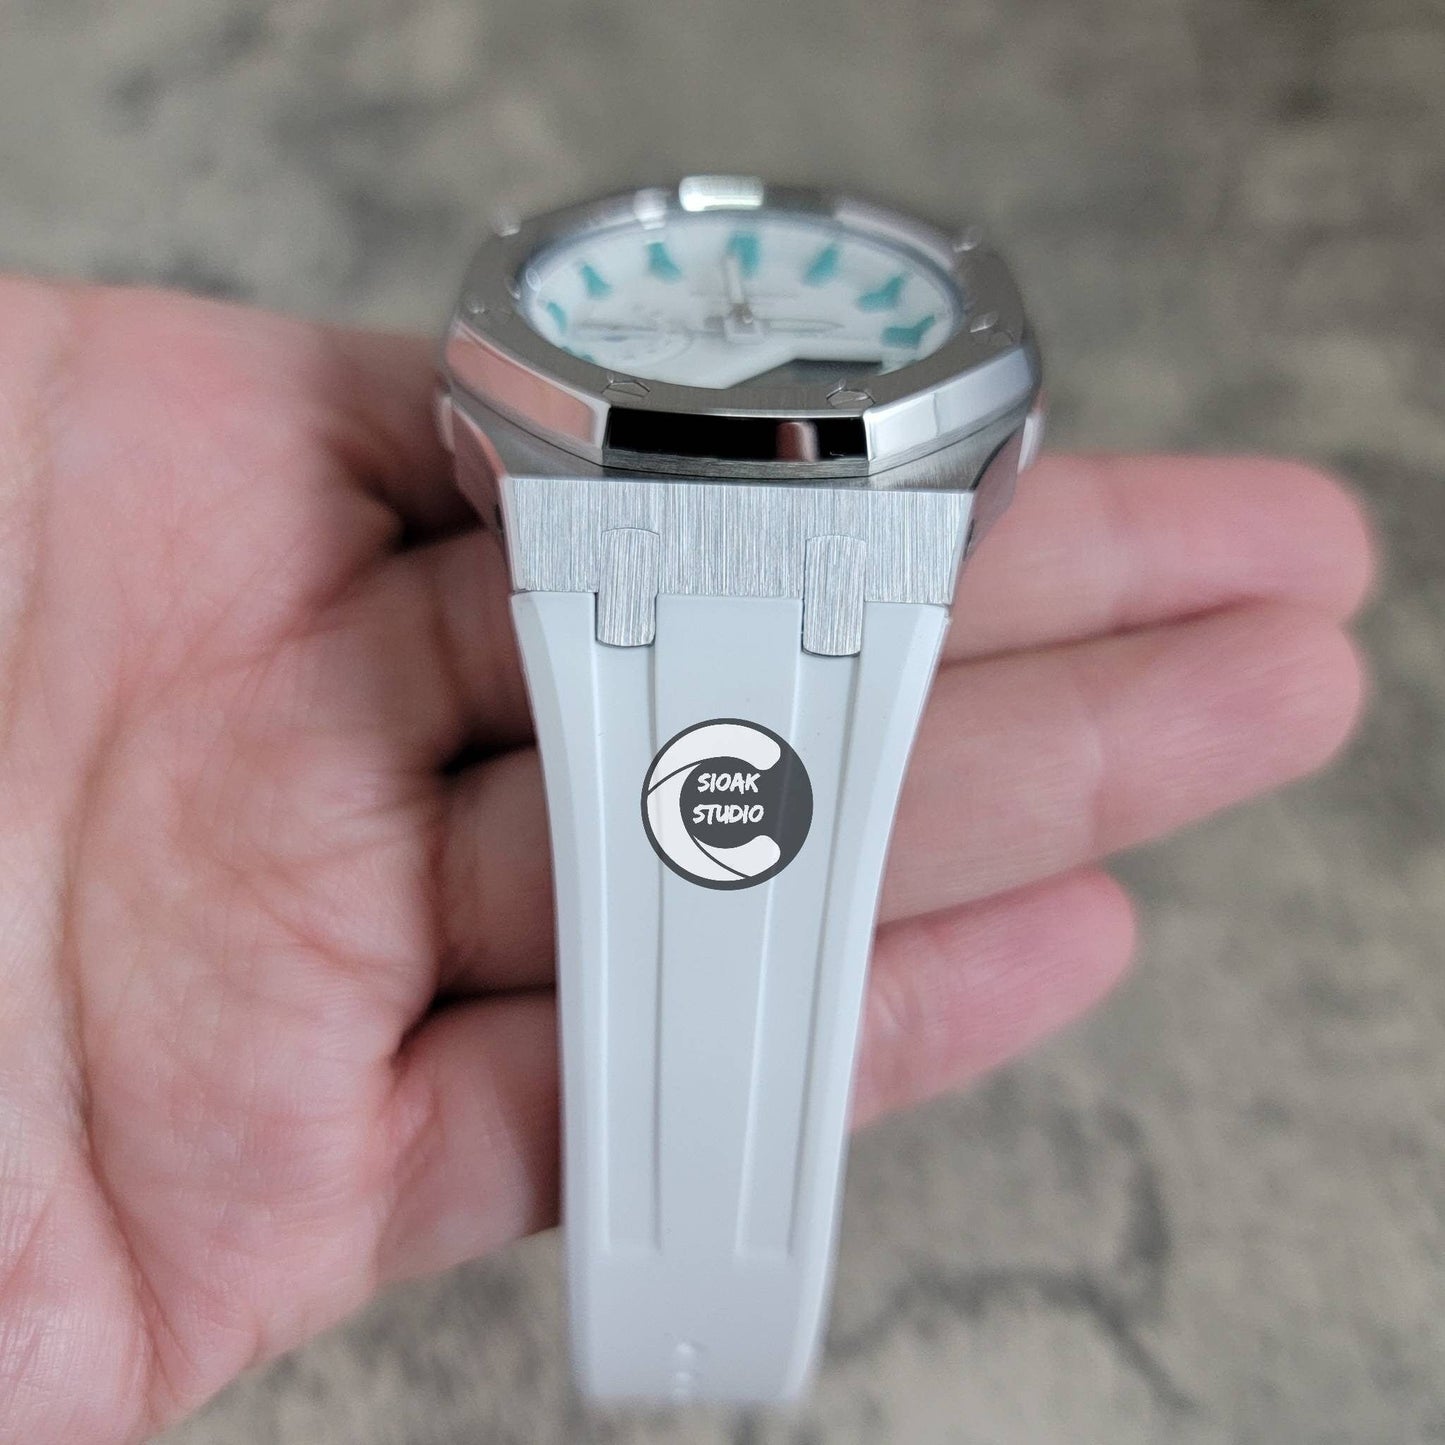 Casioak Mod Watch Silver Case White Rubber Strap White Tiffany Time Mark White Dial 42mm - Casioak Studio